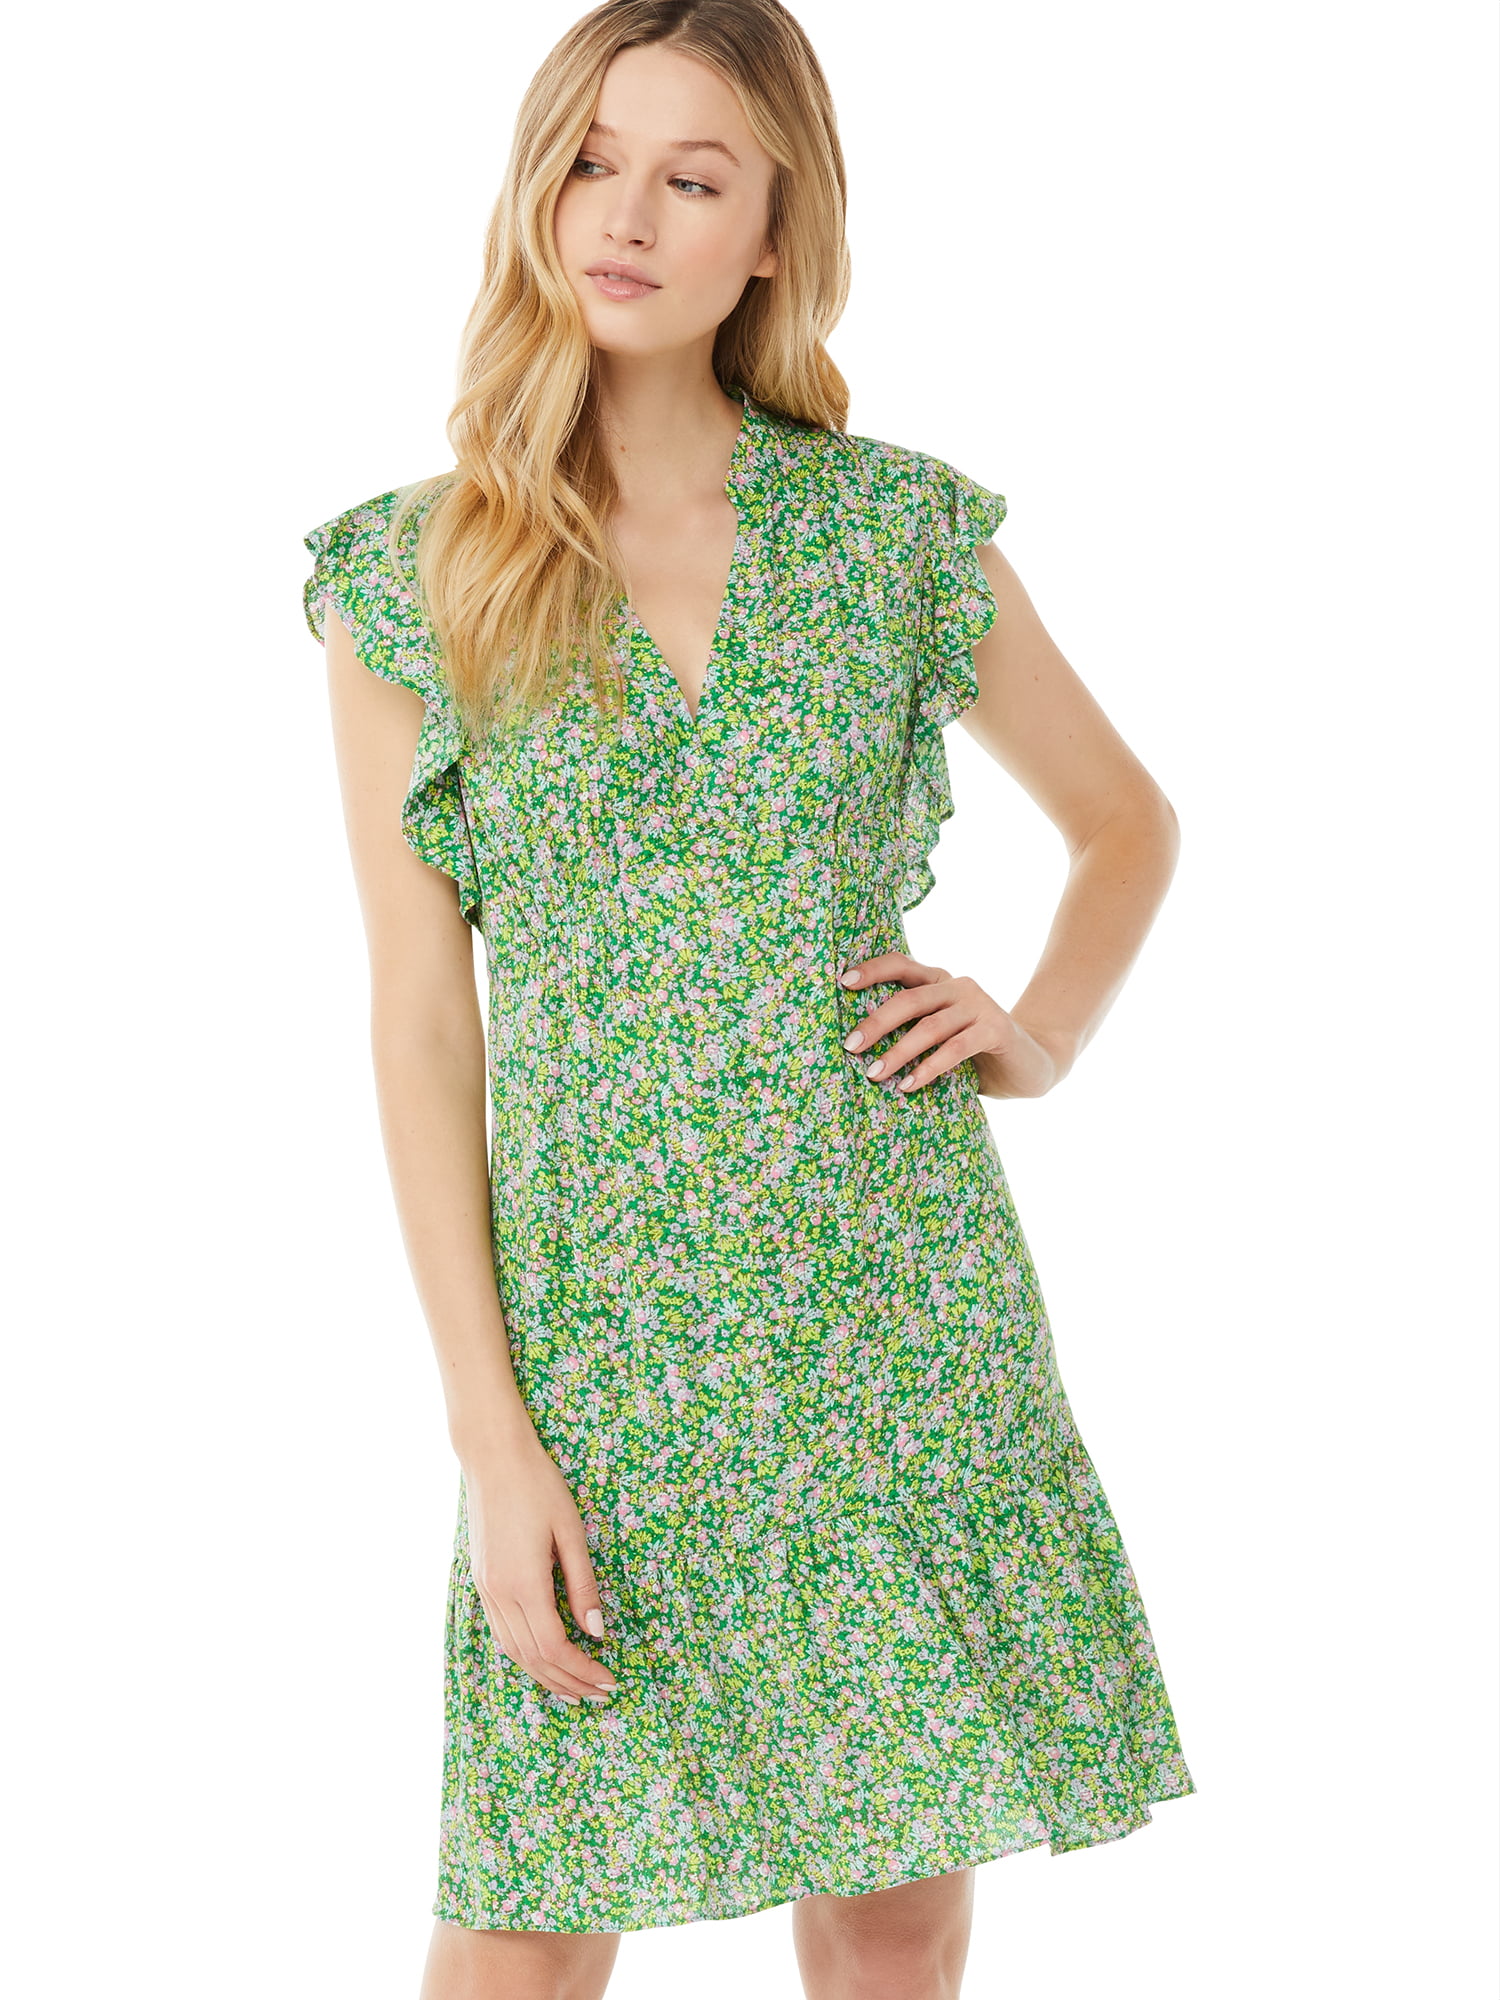 Scoop Women's Floral Mini Dress - Walmart.com